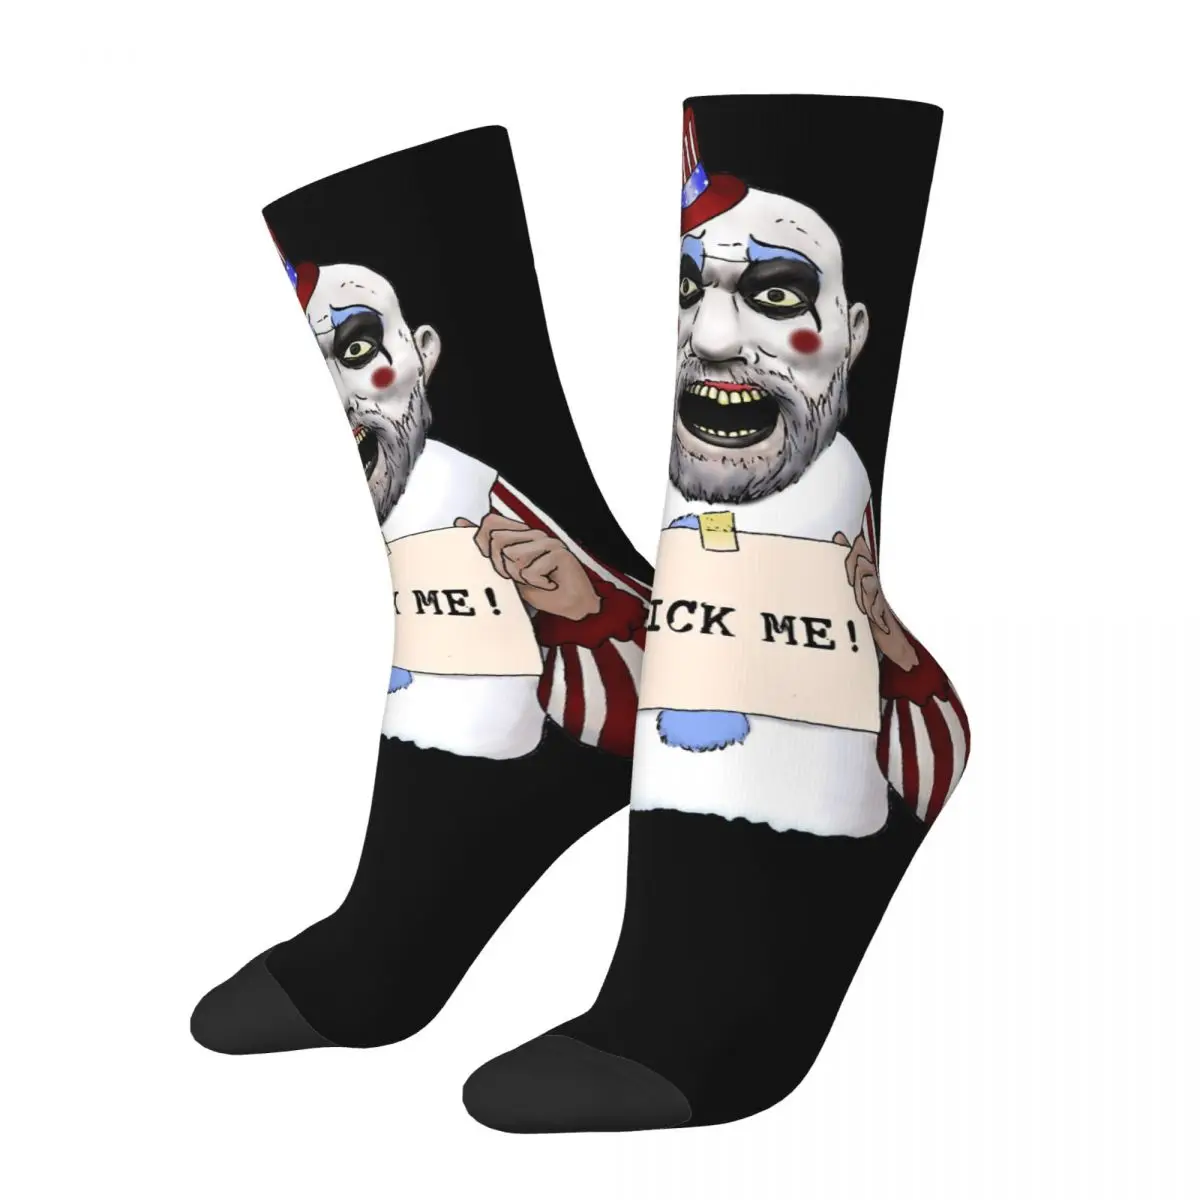 Funny Men's Compression Socks Captain Spaulding Kick Me Vintage Harajuku House Of 1000 Corpses Horror Movie Casual Crew Sock